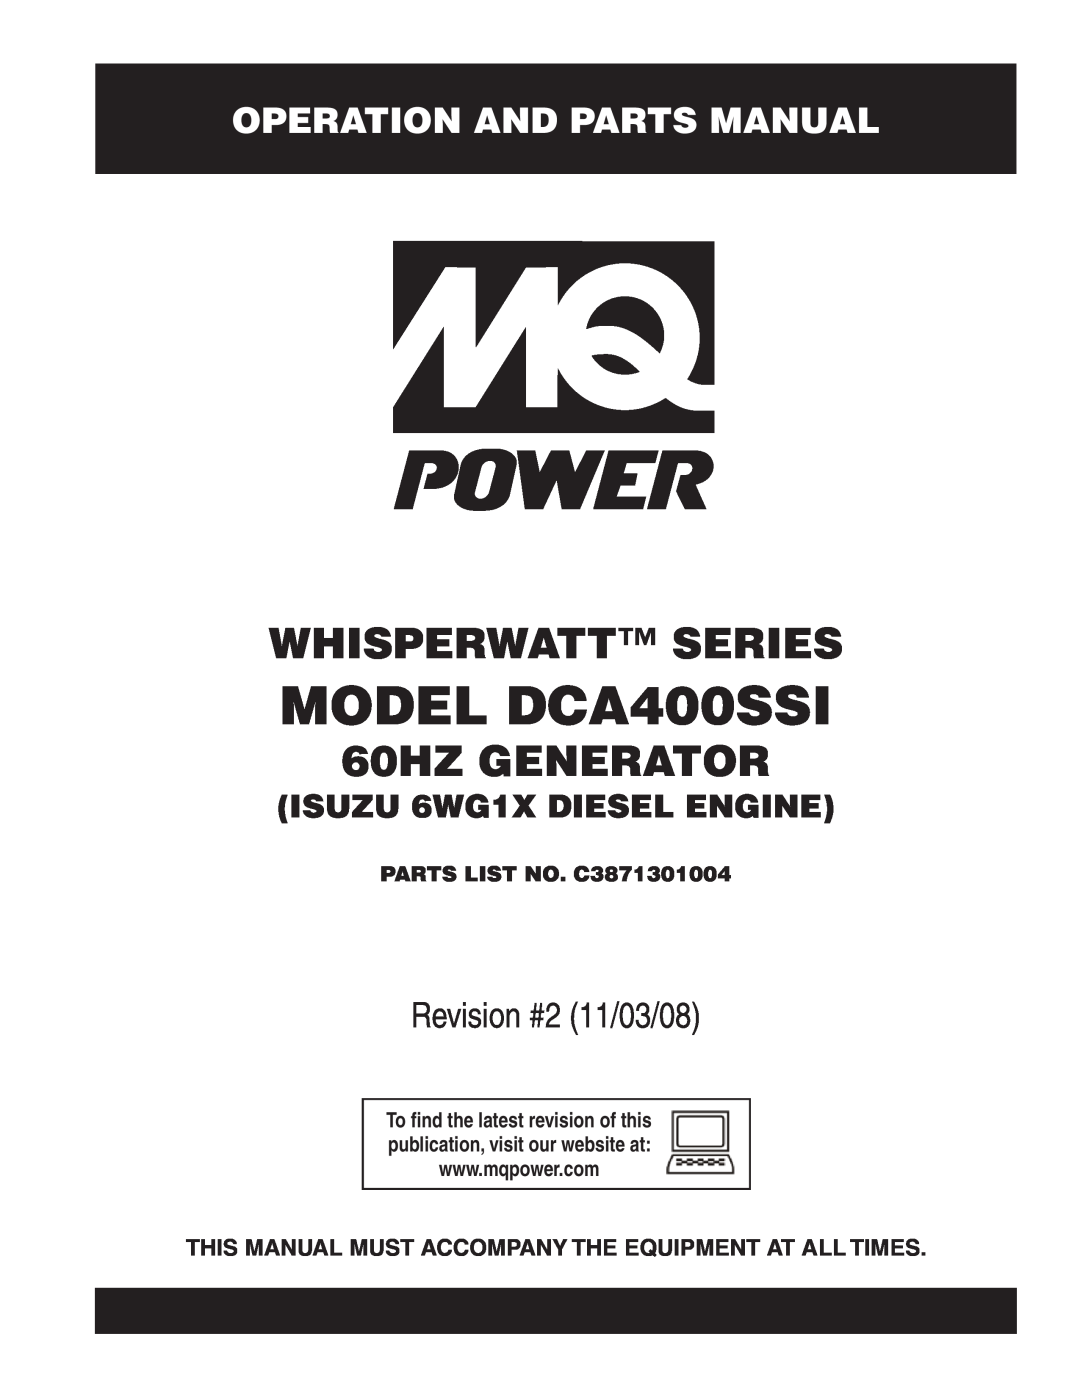 Multiquip DCA400SSI manual WhisperWattTM Generator, Standard Features, E-Coatprimer with polyurethane enamel finish coat 